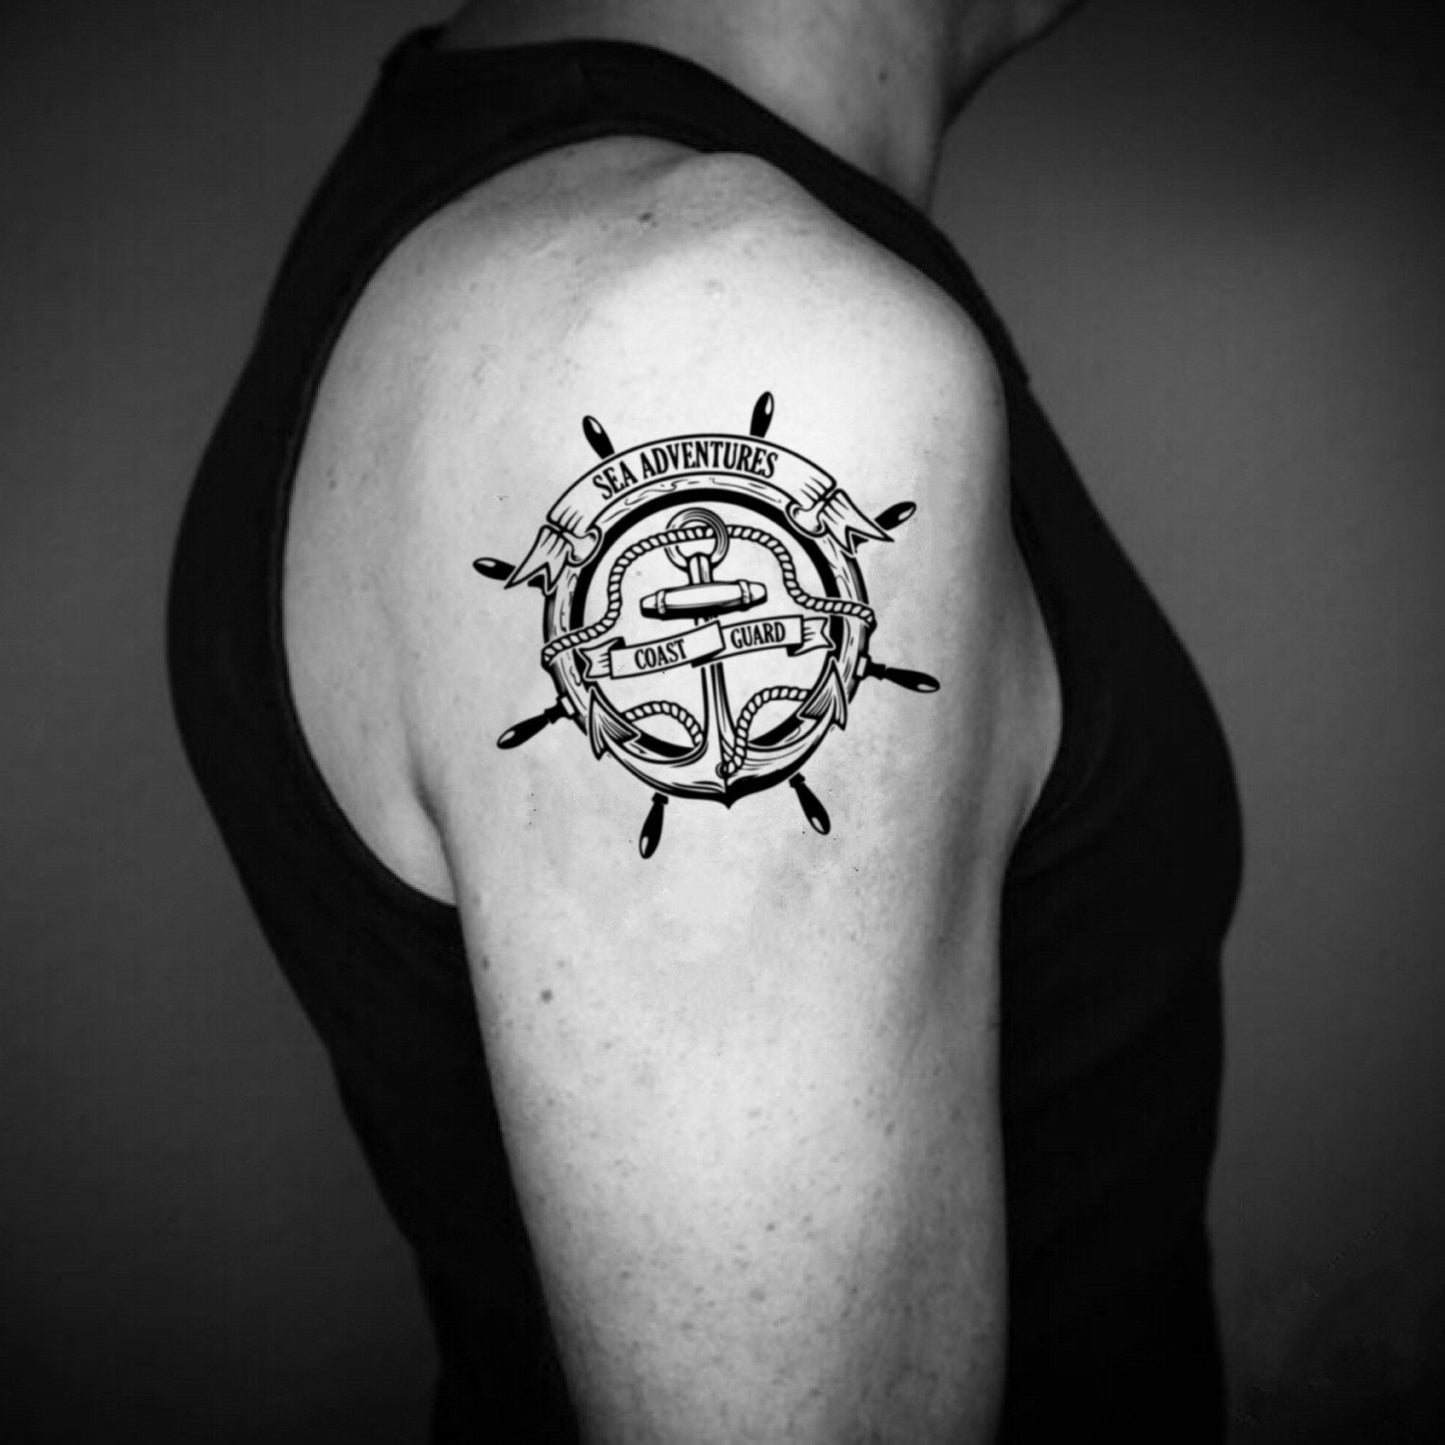 fake medium coast guard illustrative temporary tattoo sticker design idea on upper arm